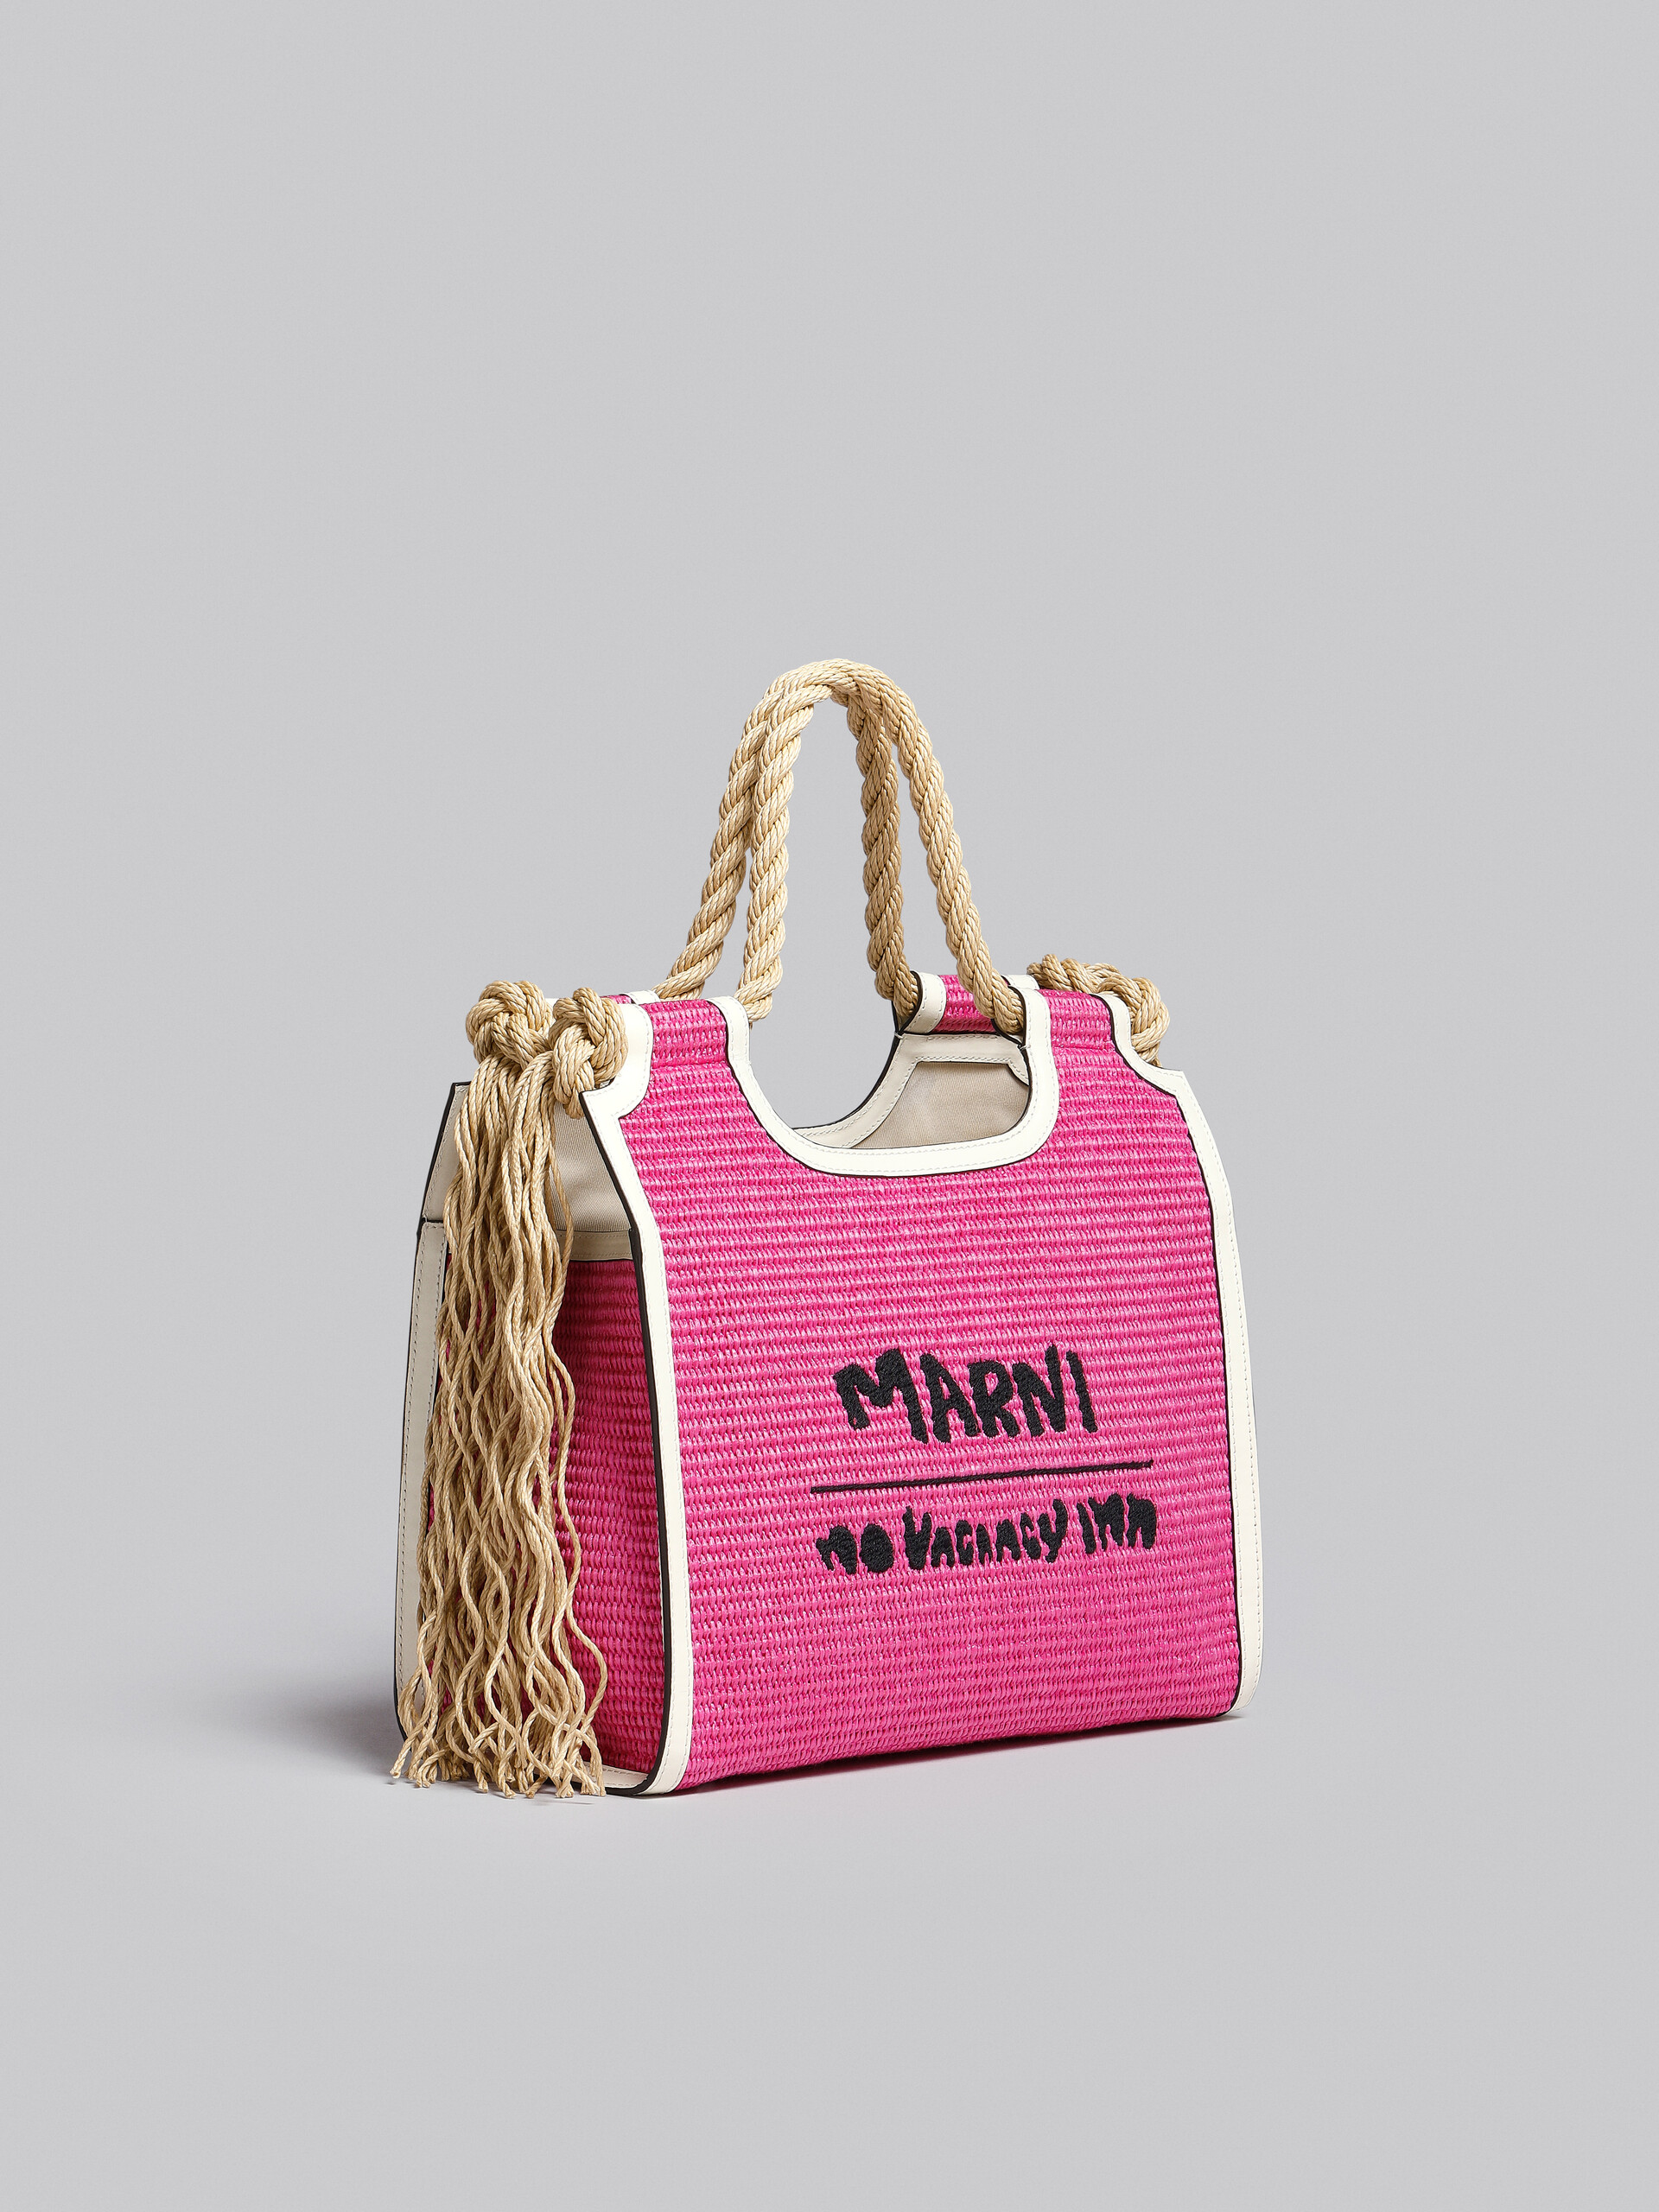 Marni x No Vacancy Inn - Marcel Tote Bag in pink raffia with white trims - Handbag - Image 6